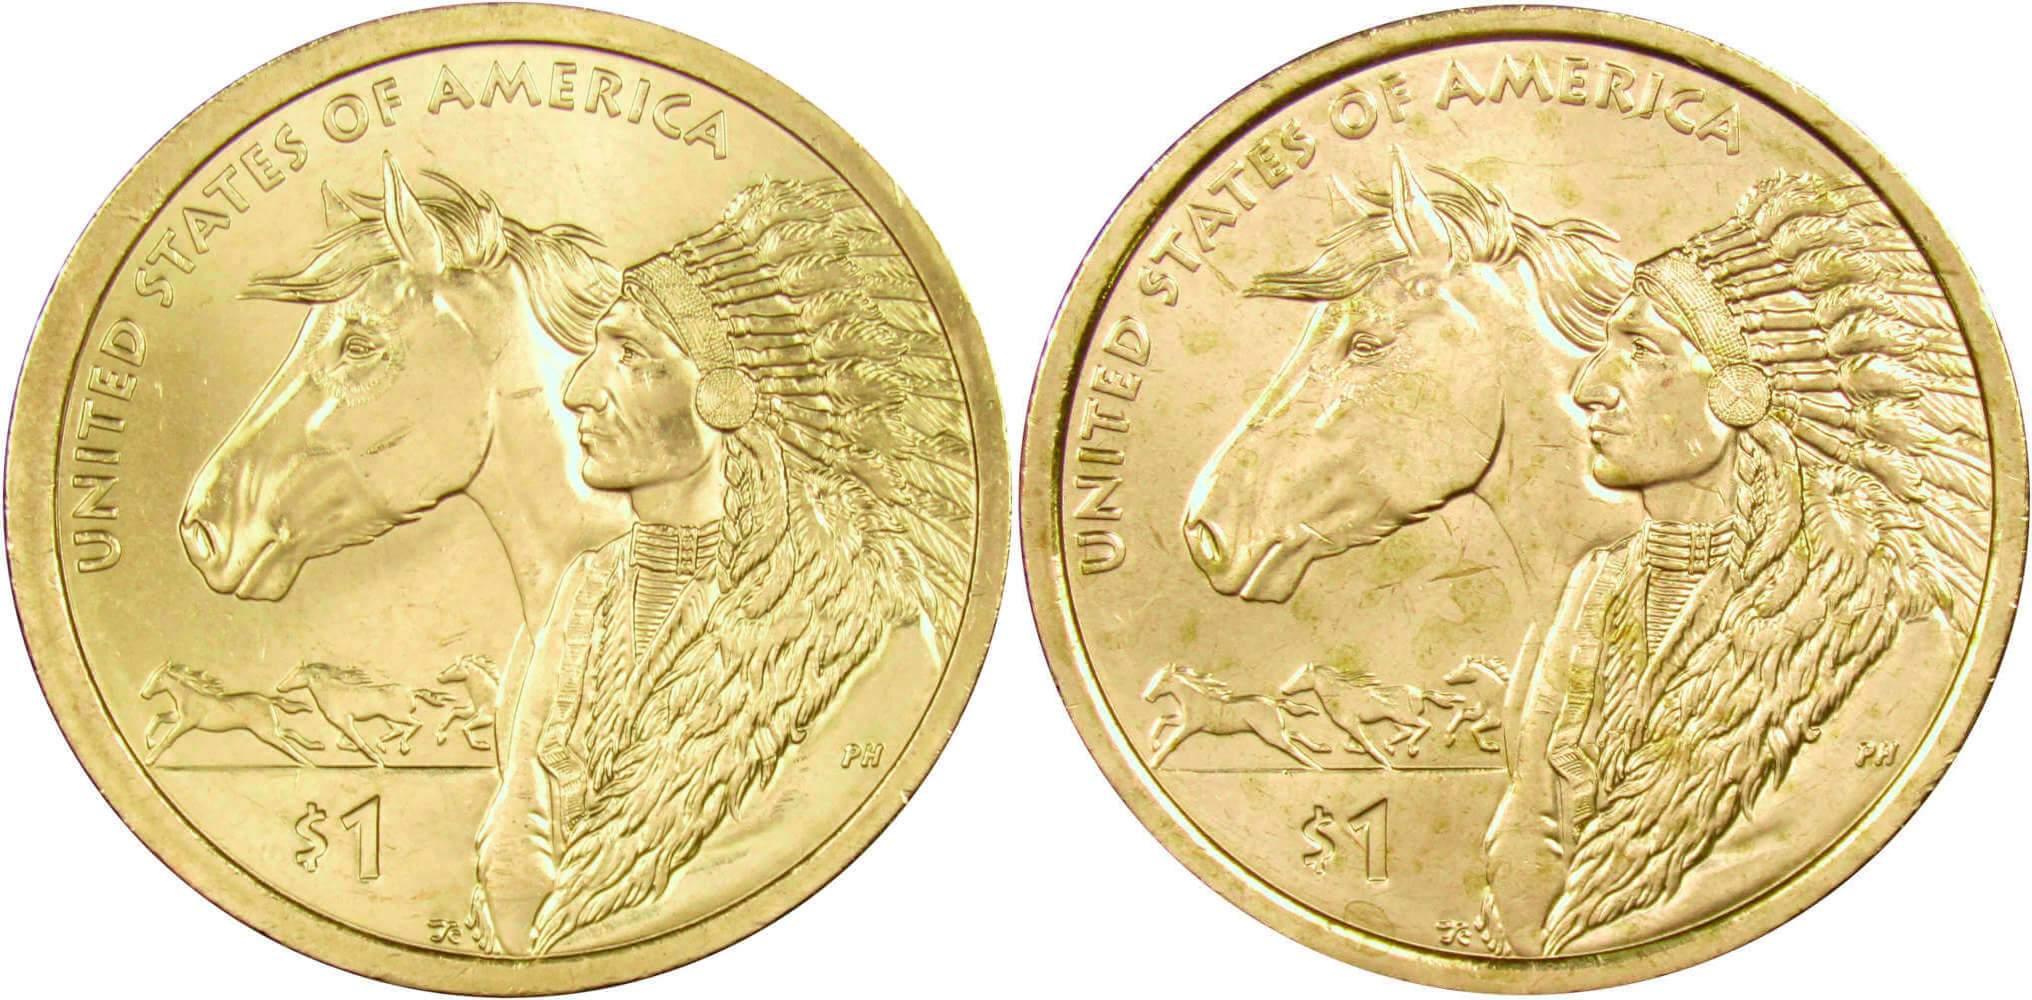 2012 P&D Trade Routes Native American Dollar 2 Coin Set BU Uncirculated $1